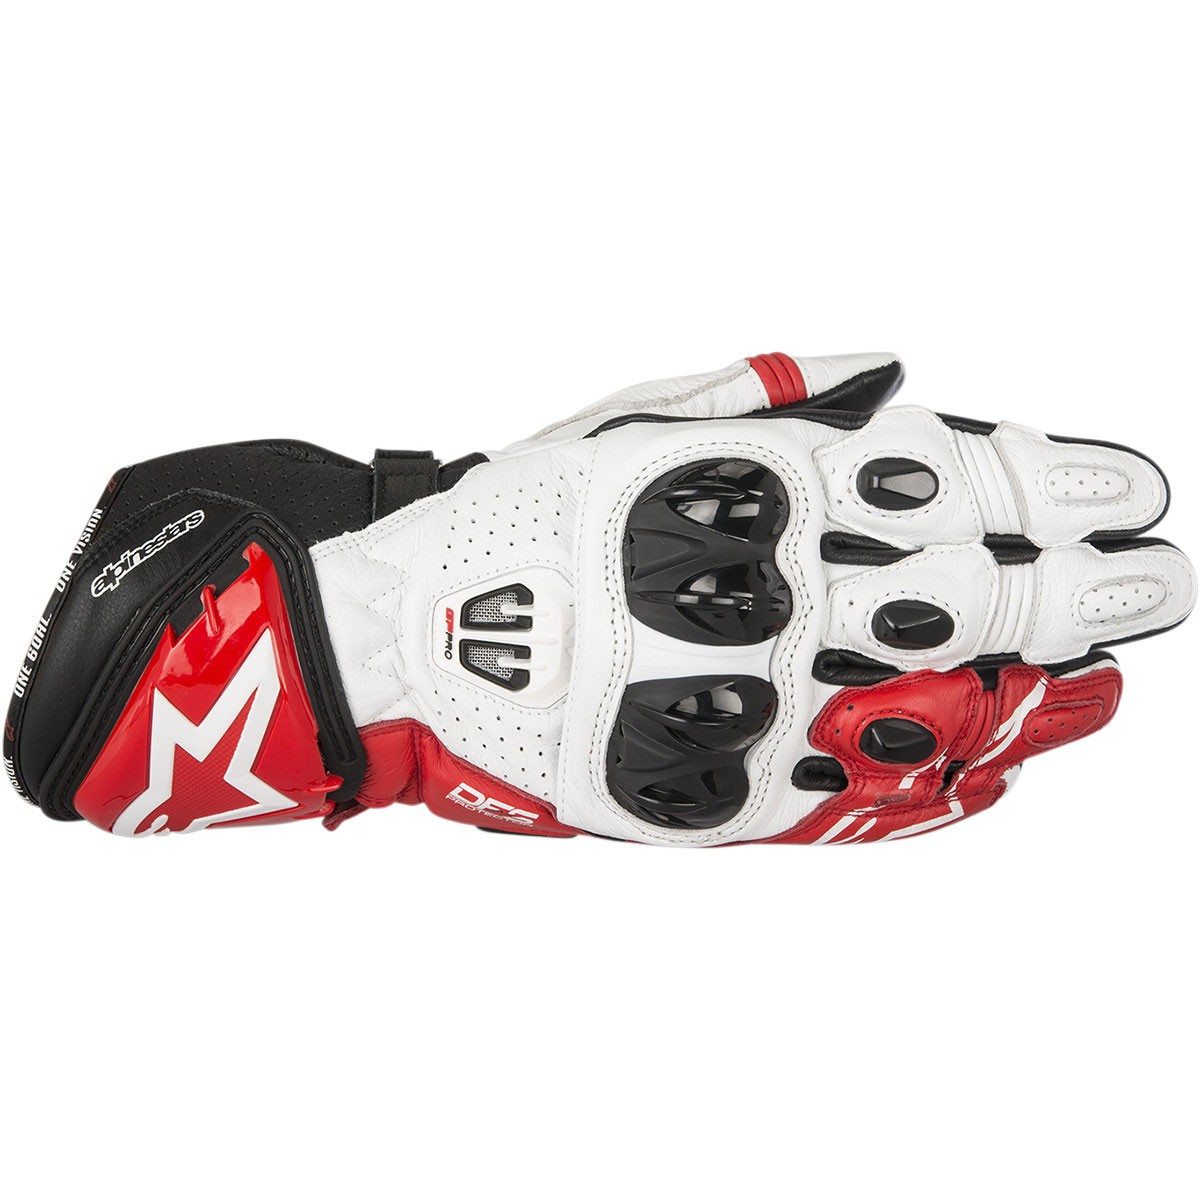 gp-pro-r2-gloves-black-white-red-s.jpg